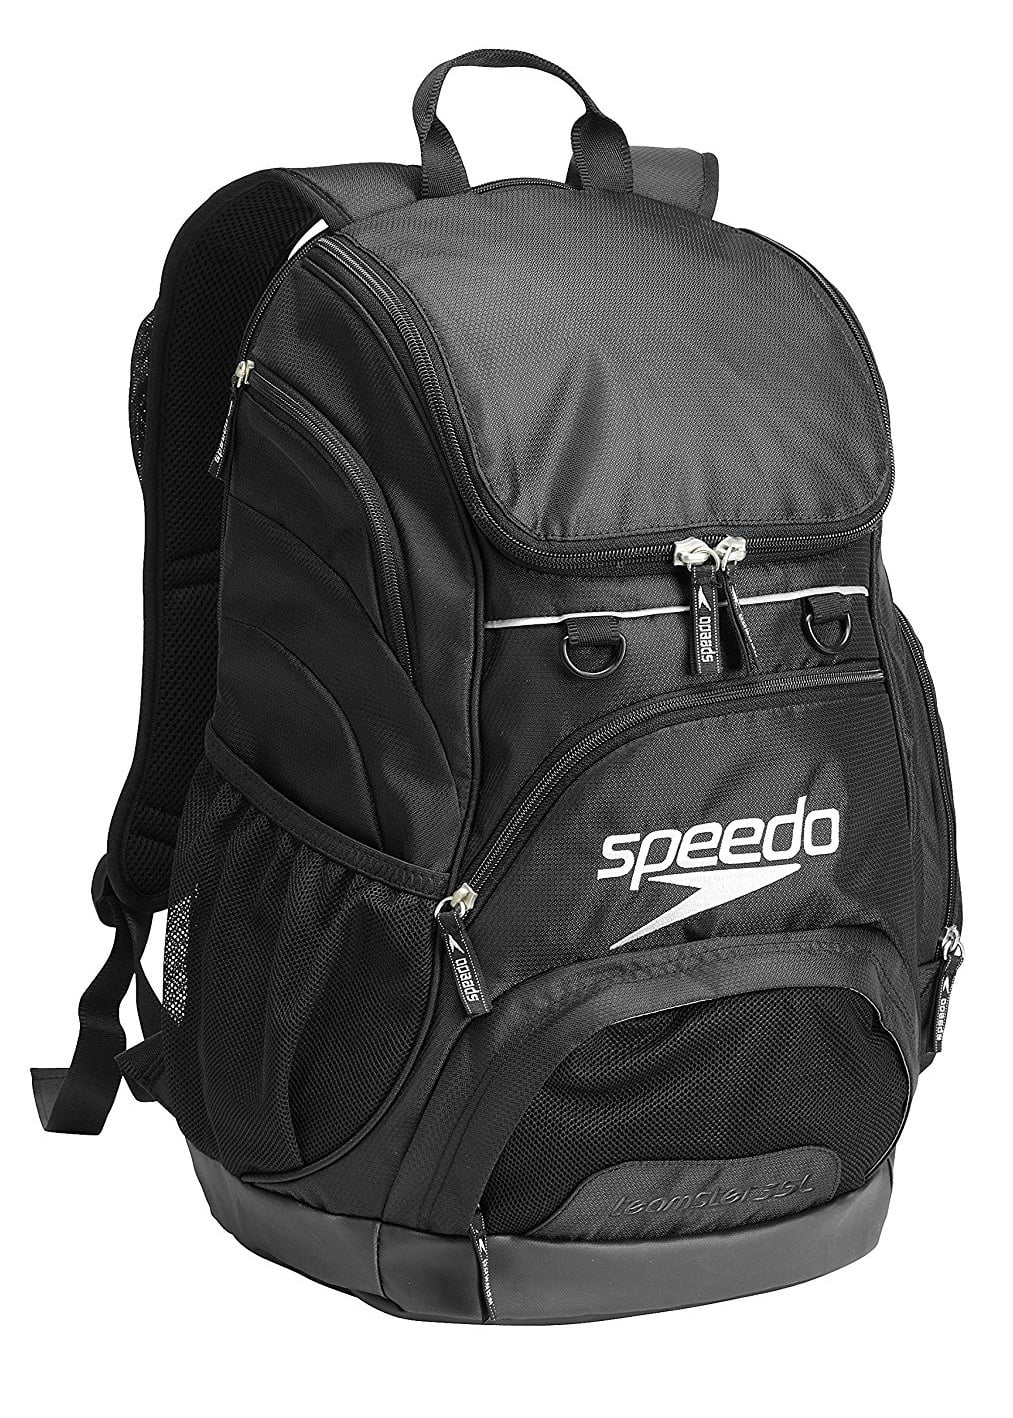 Speedo Teamster Backpack Swim Swimming Gear Back Pack Equipment Bag - 35L  Liters - Walmart.com